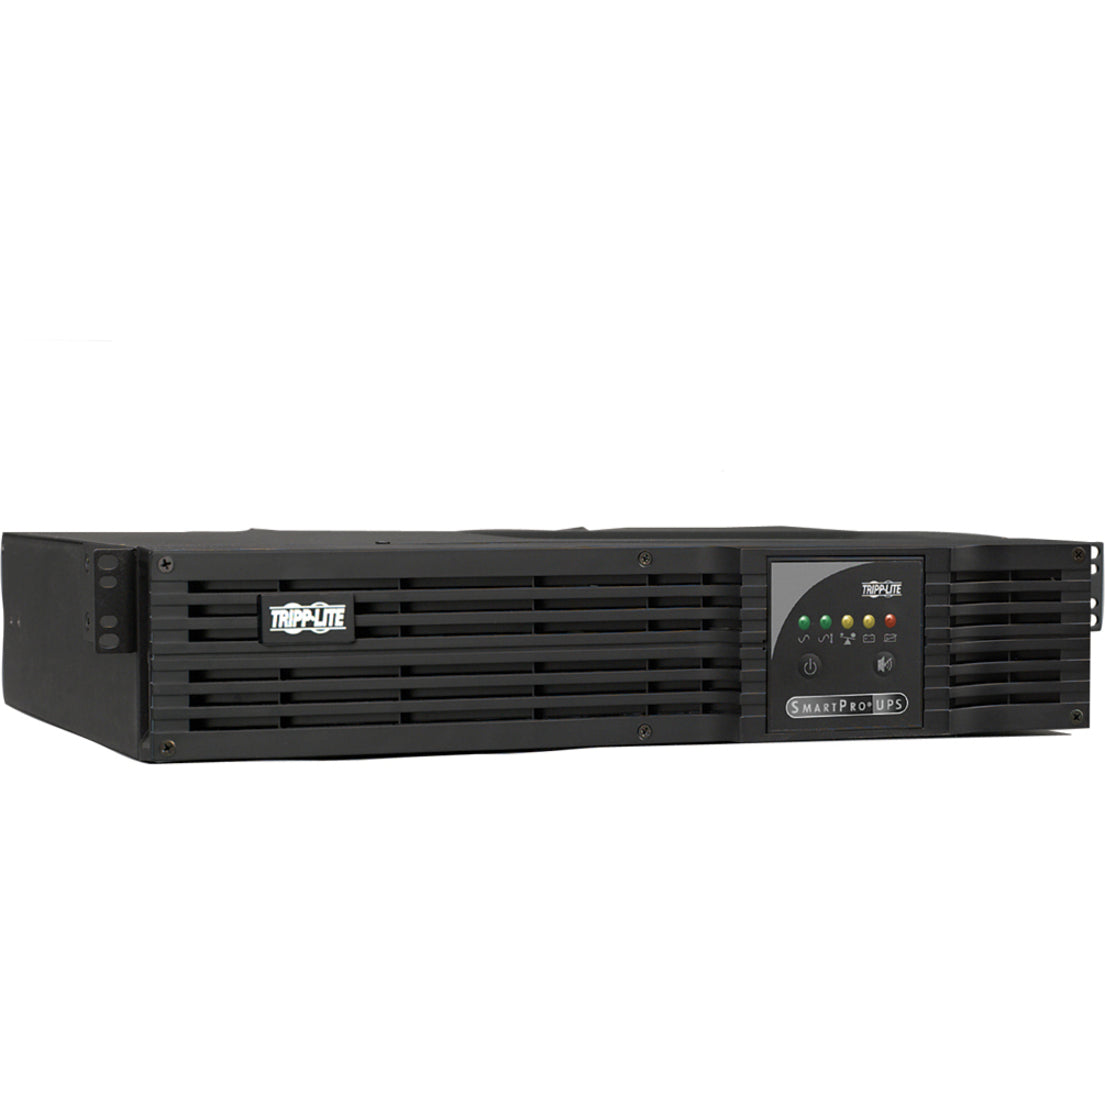 Tripp Lite SMX1000RT2U SmartPro 1000VA UPS, Rackmountable/Tower, 6 Outlets, USB/DB9, 2 Year Warranty